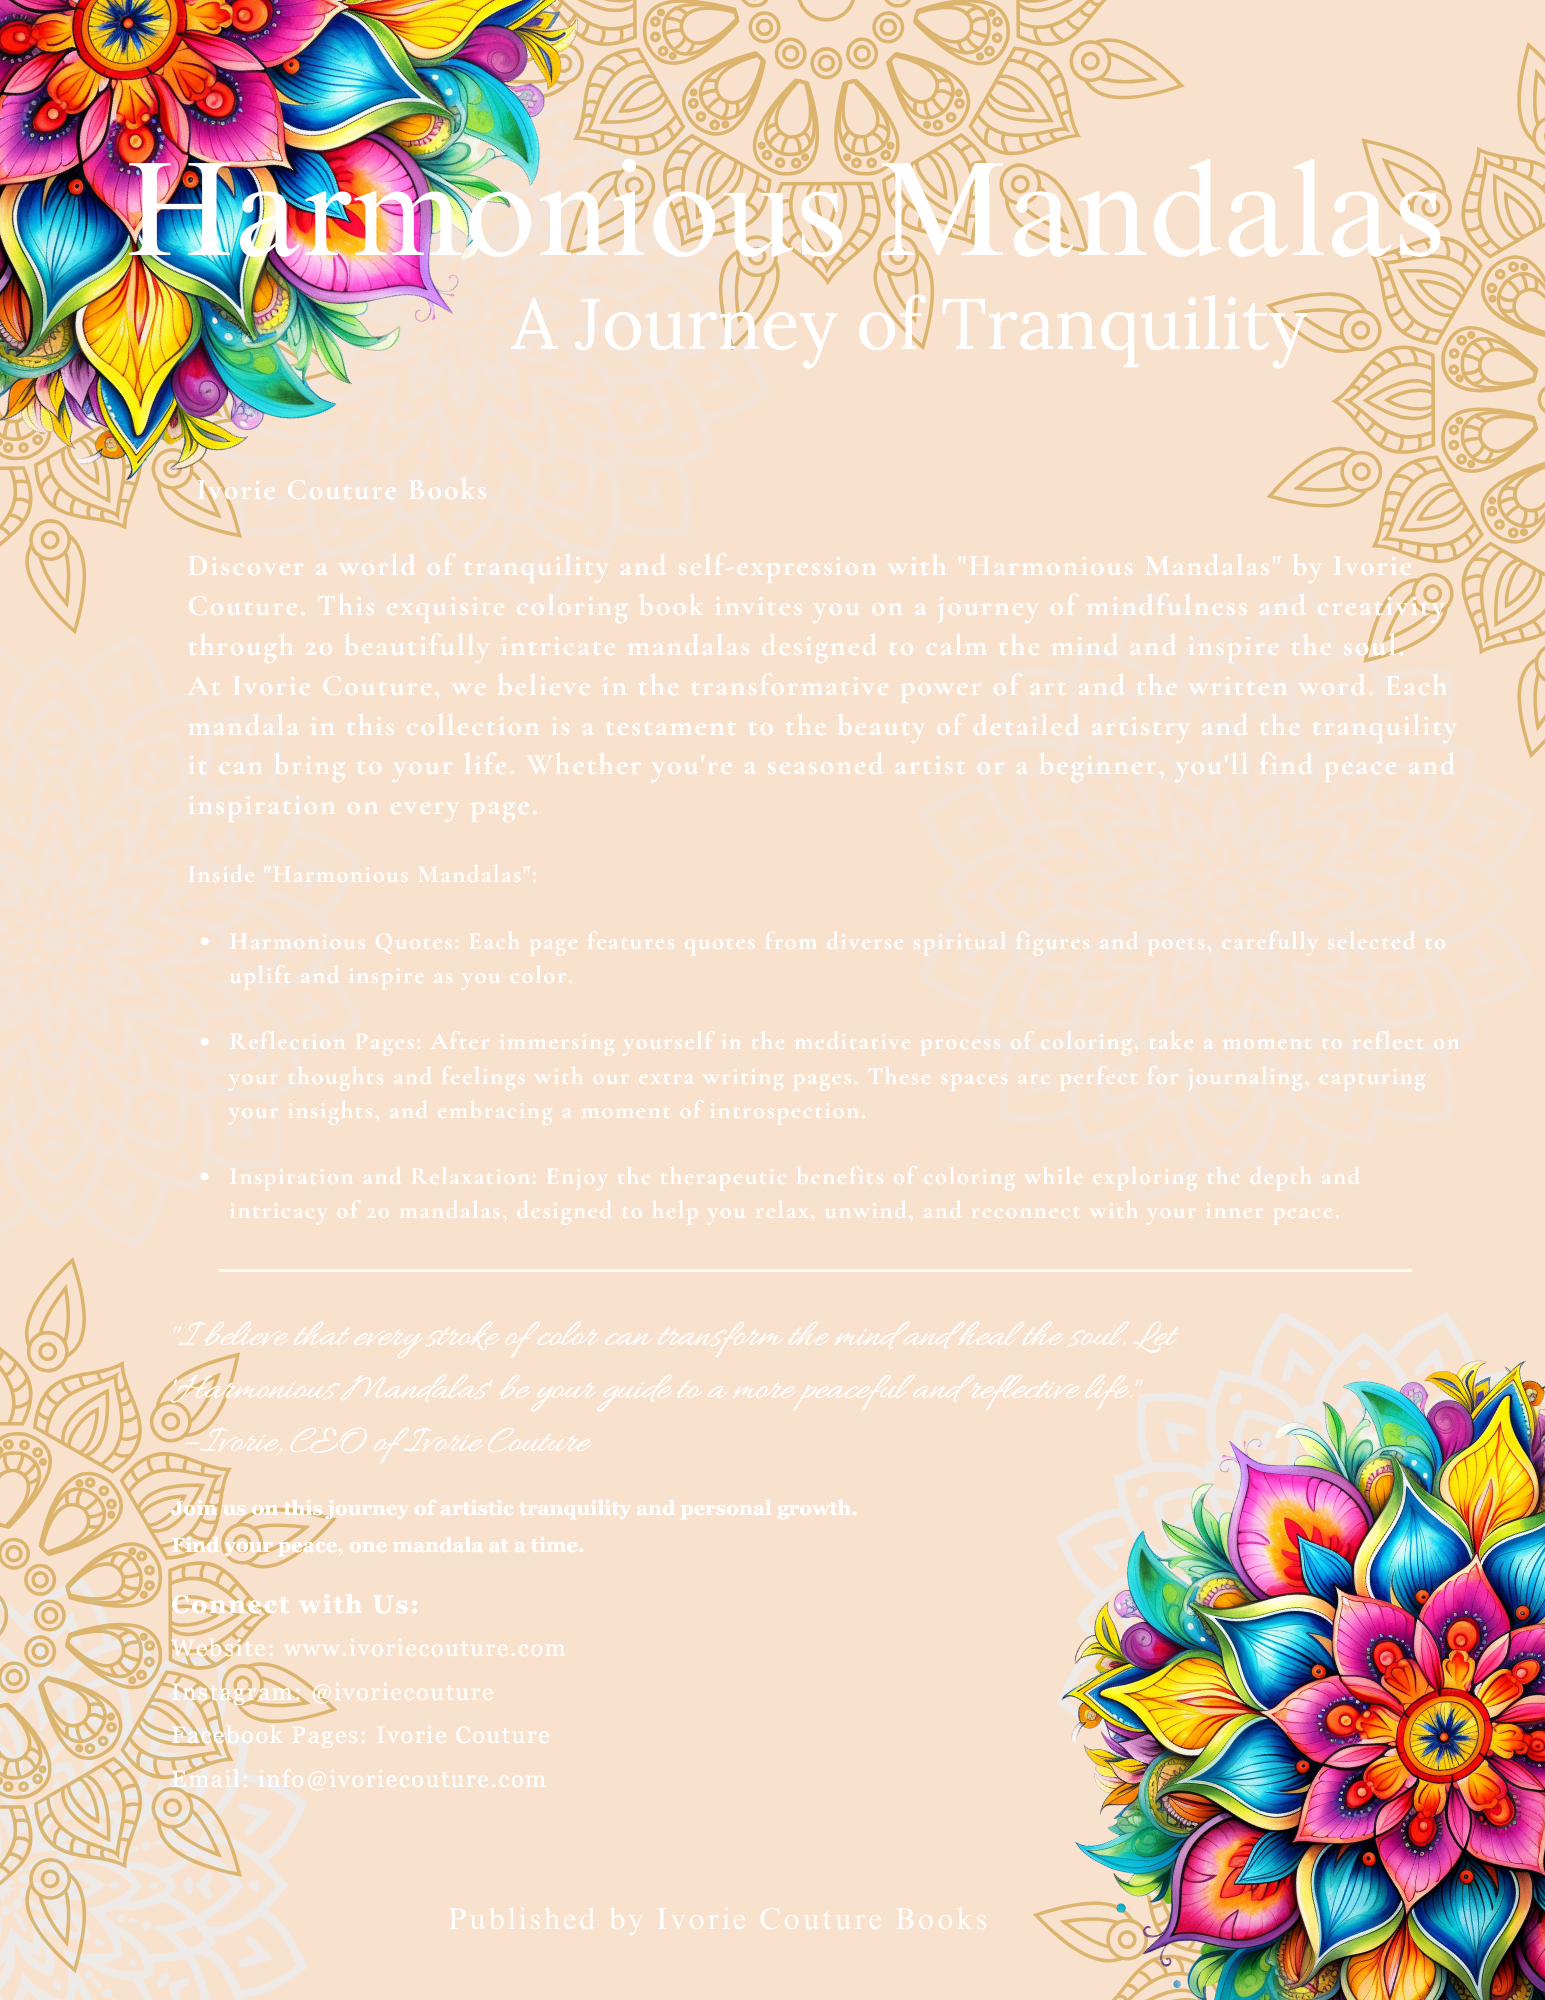 Harmonious Mandalas: A Journey of Tranquility (Tan Cover)